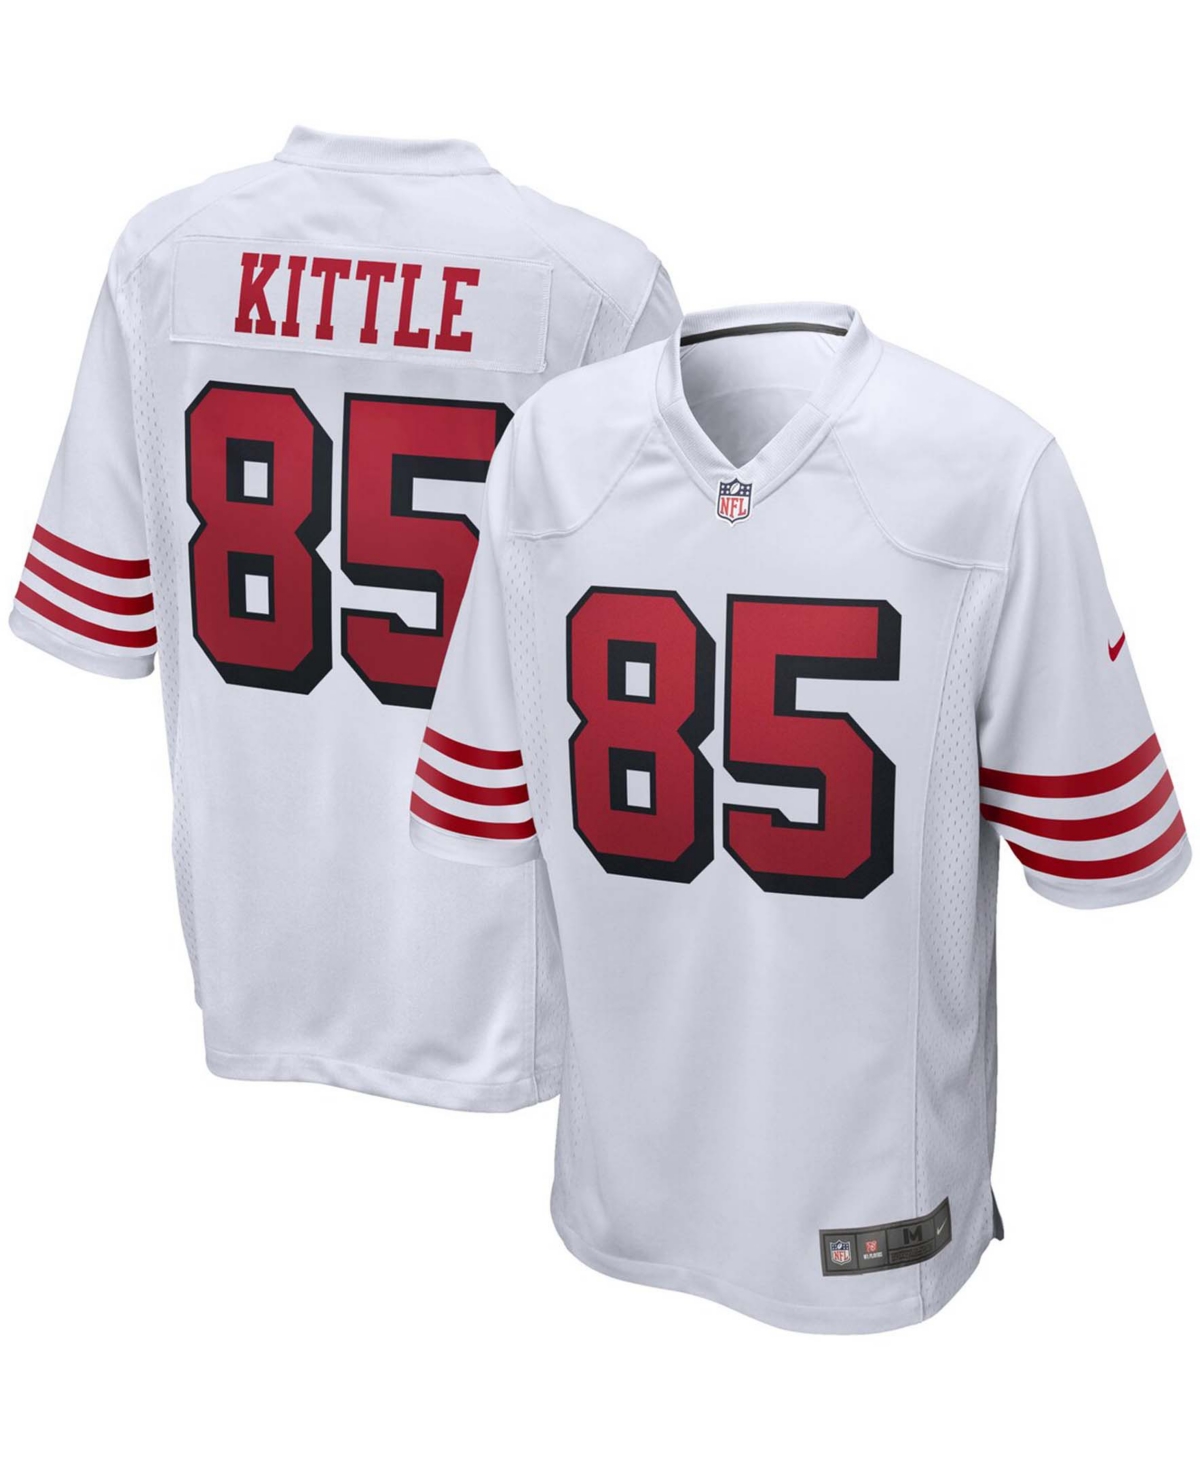 Nike Men's George Kittle San Francisco 49ers Alternate Game Jersey